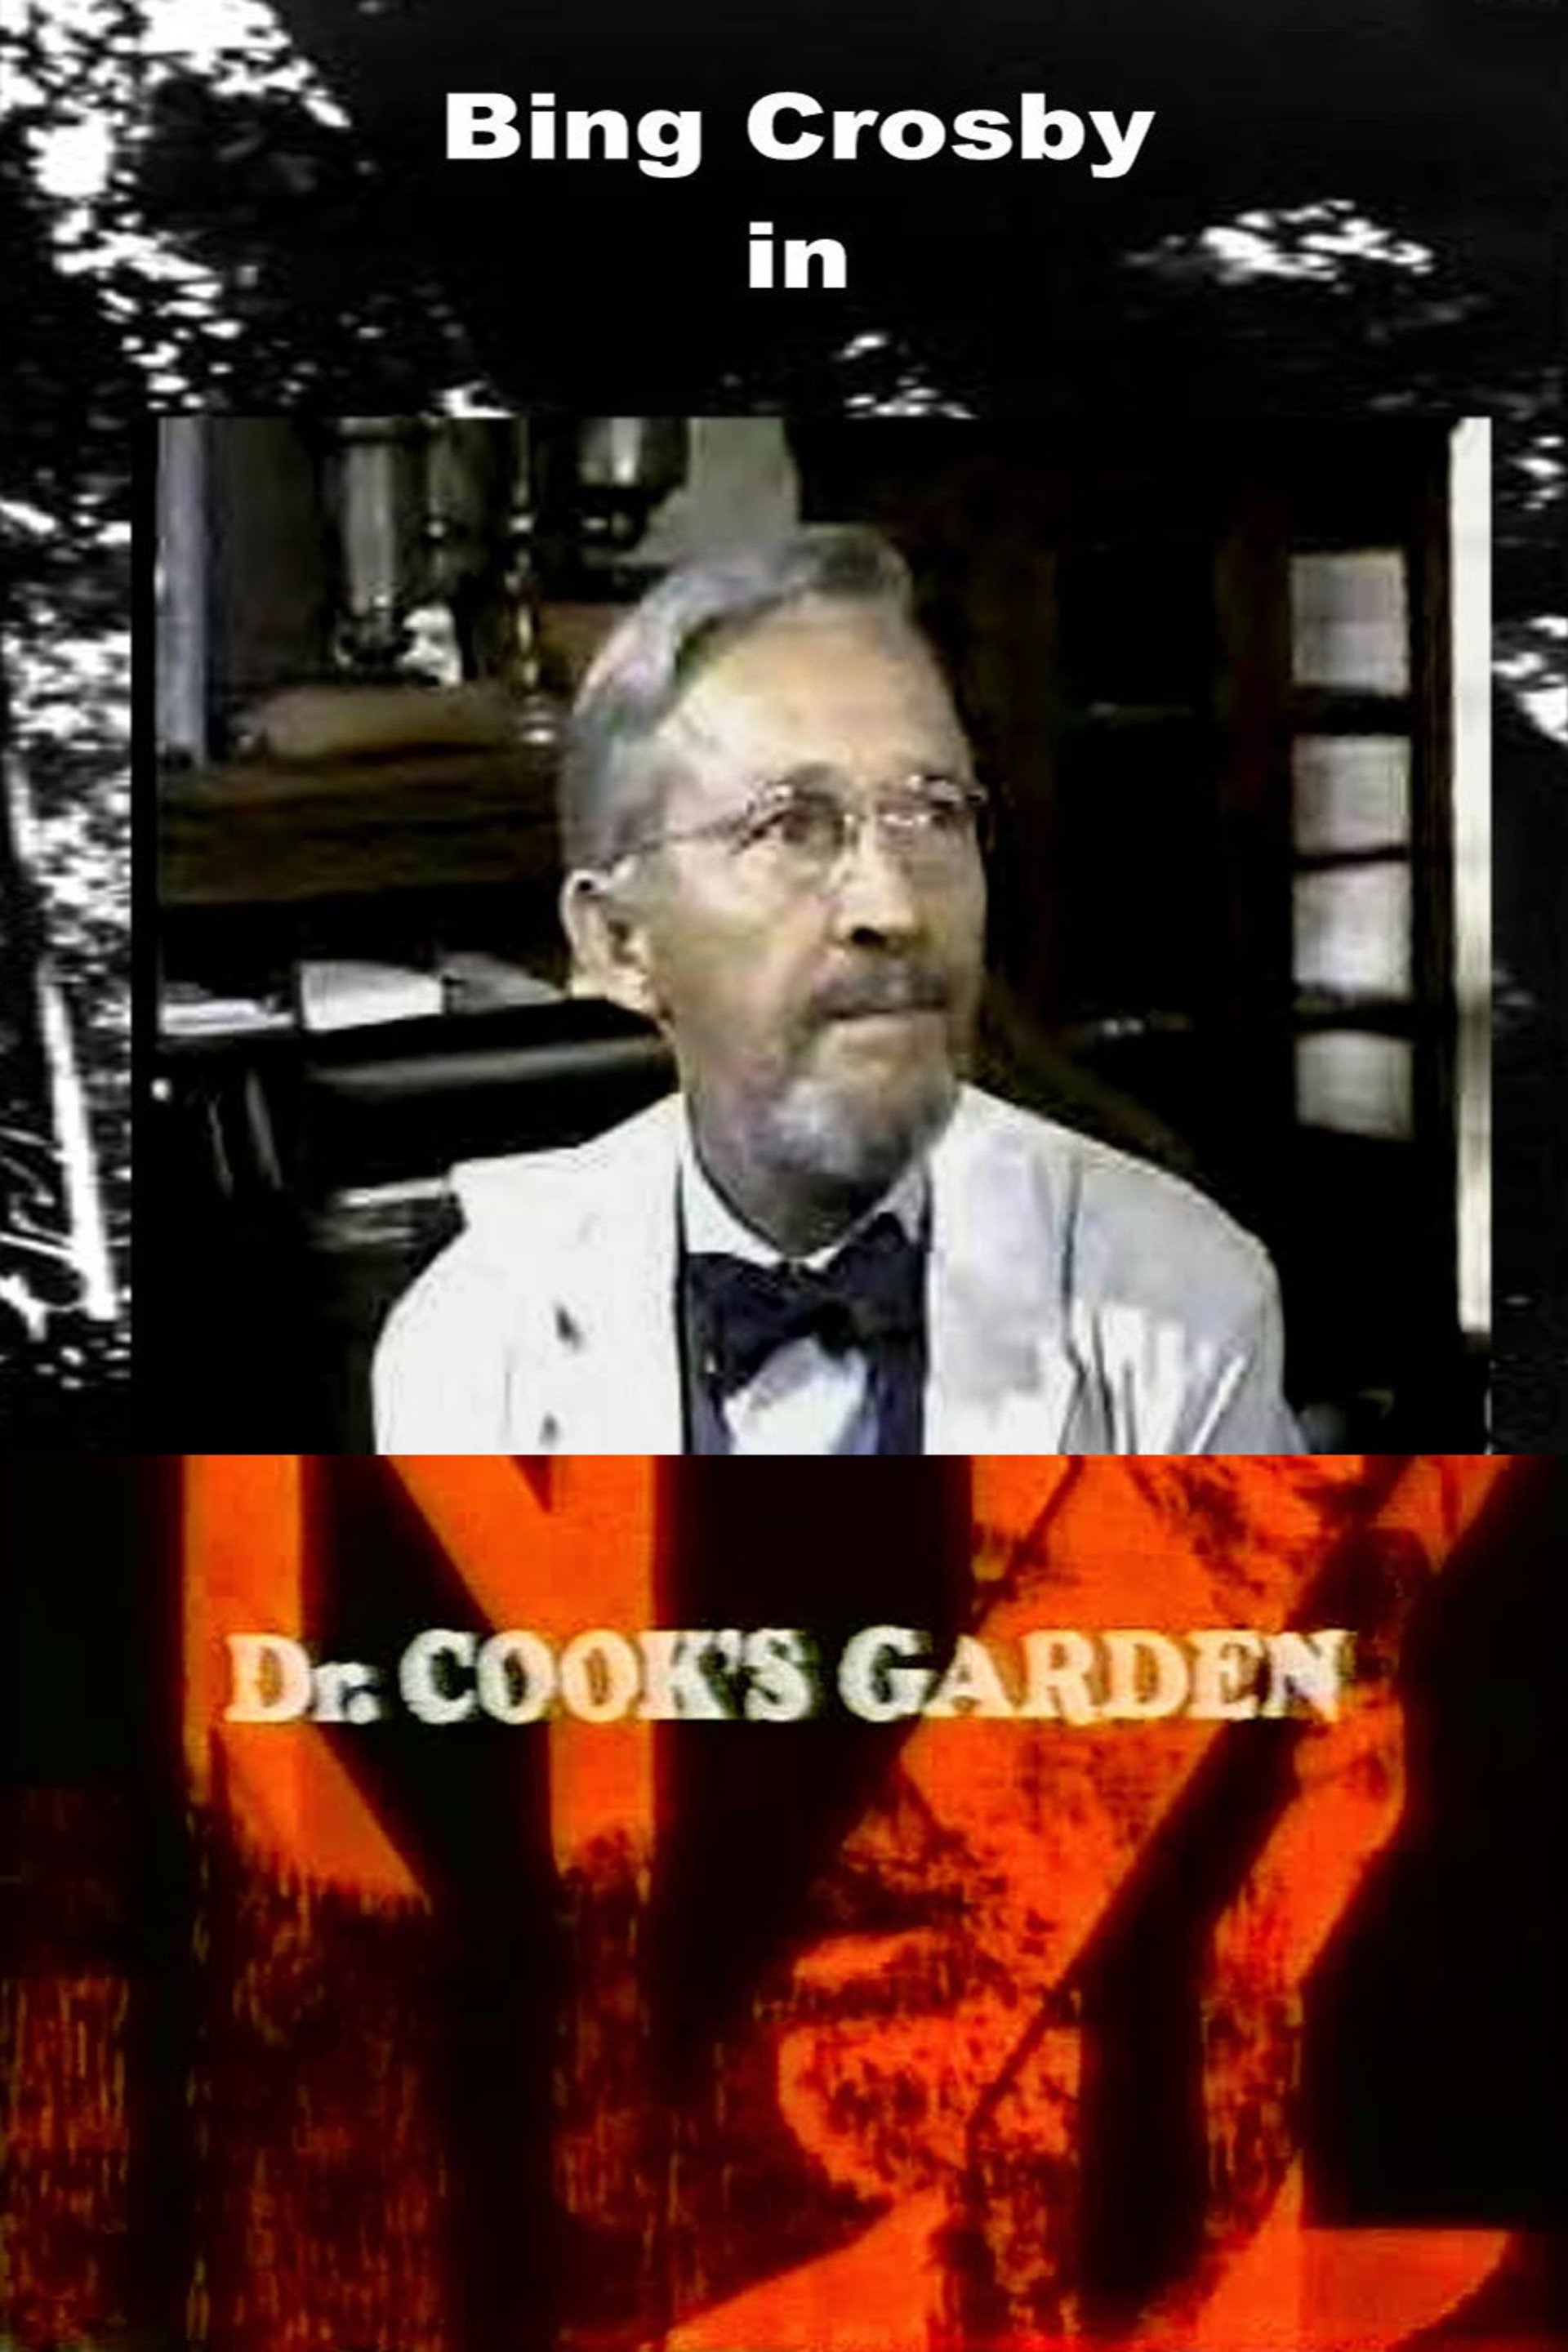 Dr. Cook's Garden (1971) starring Bing Crosby on DVD on DVD